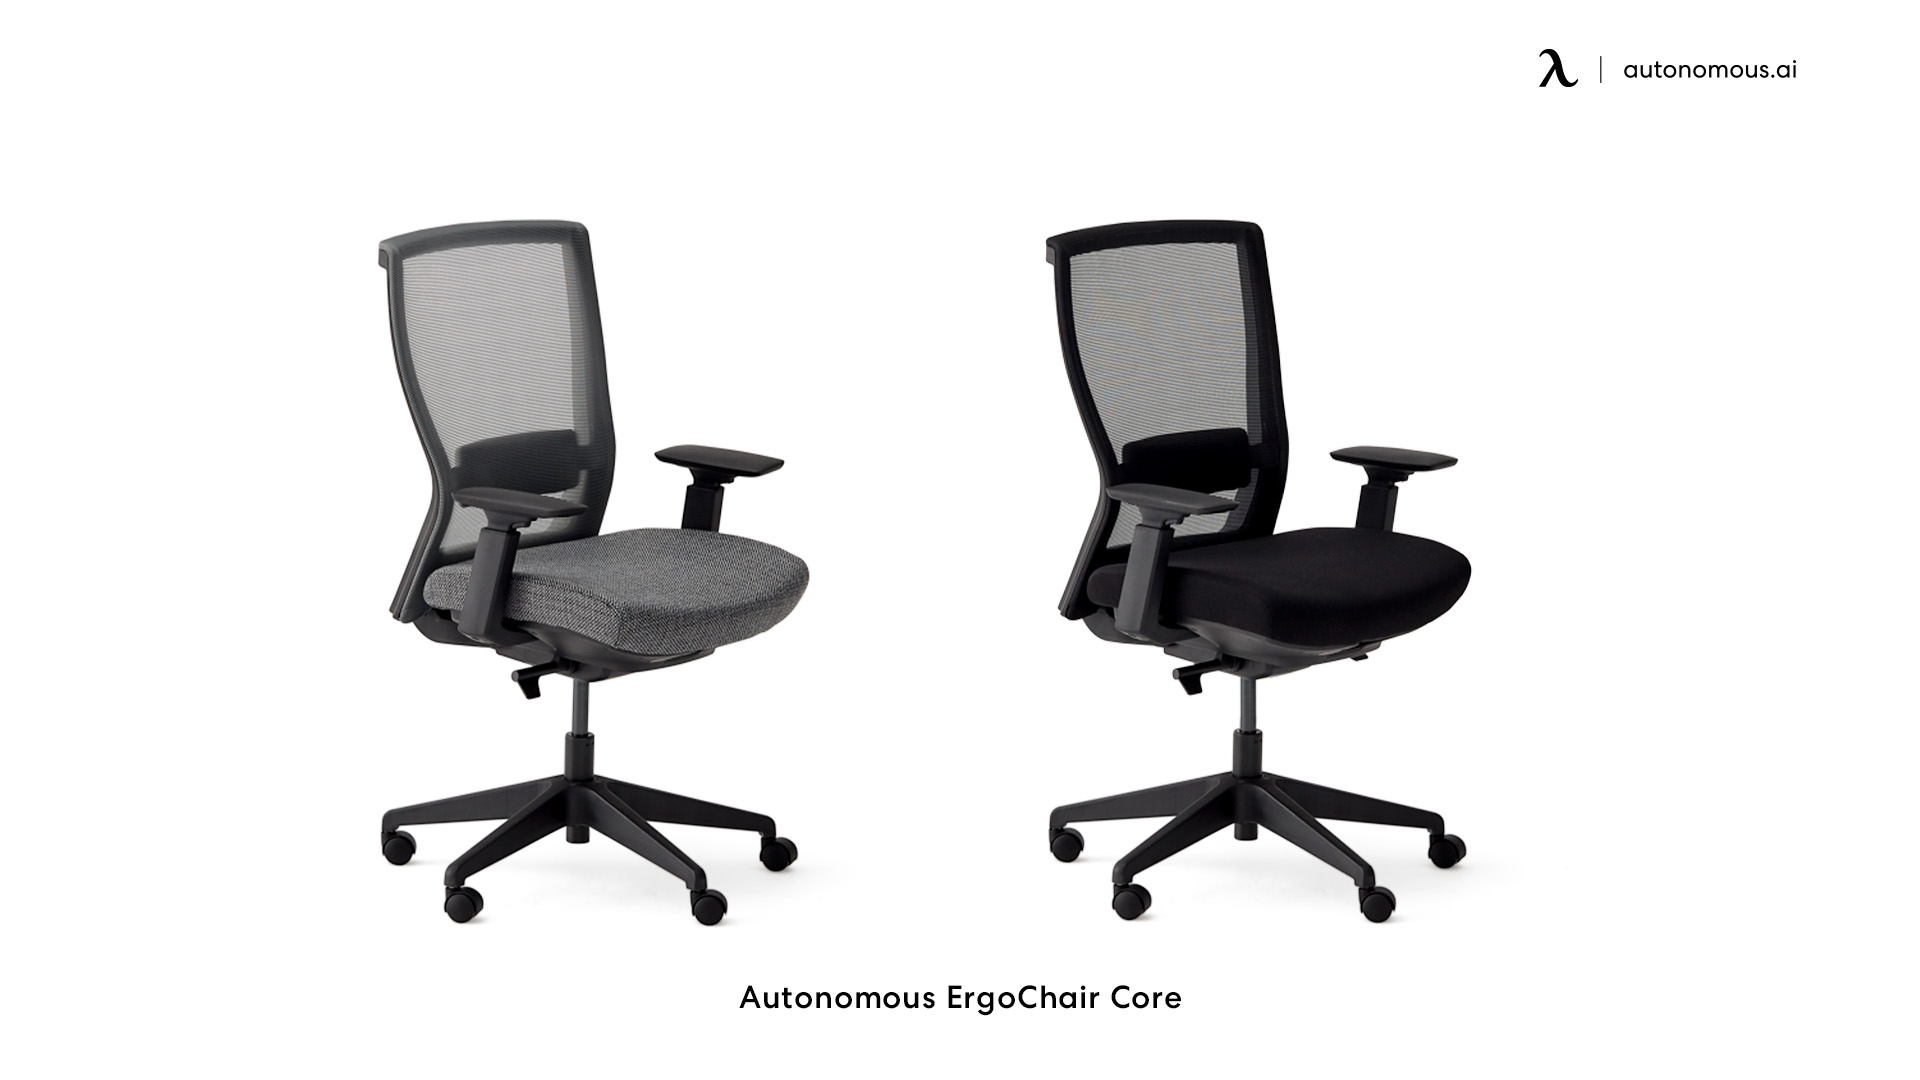 Autonomous ErgoChair Core stylish home office chair